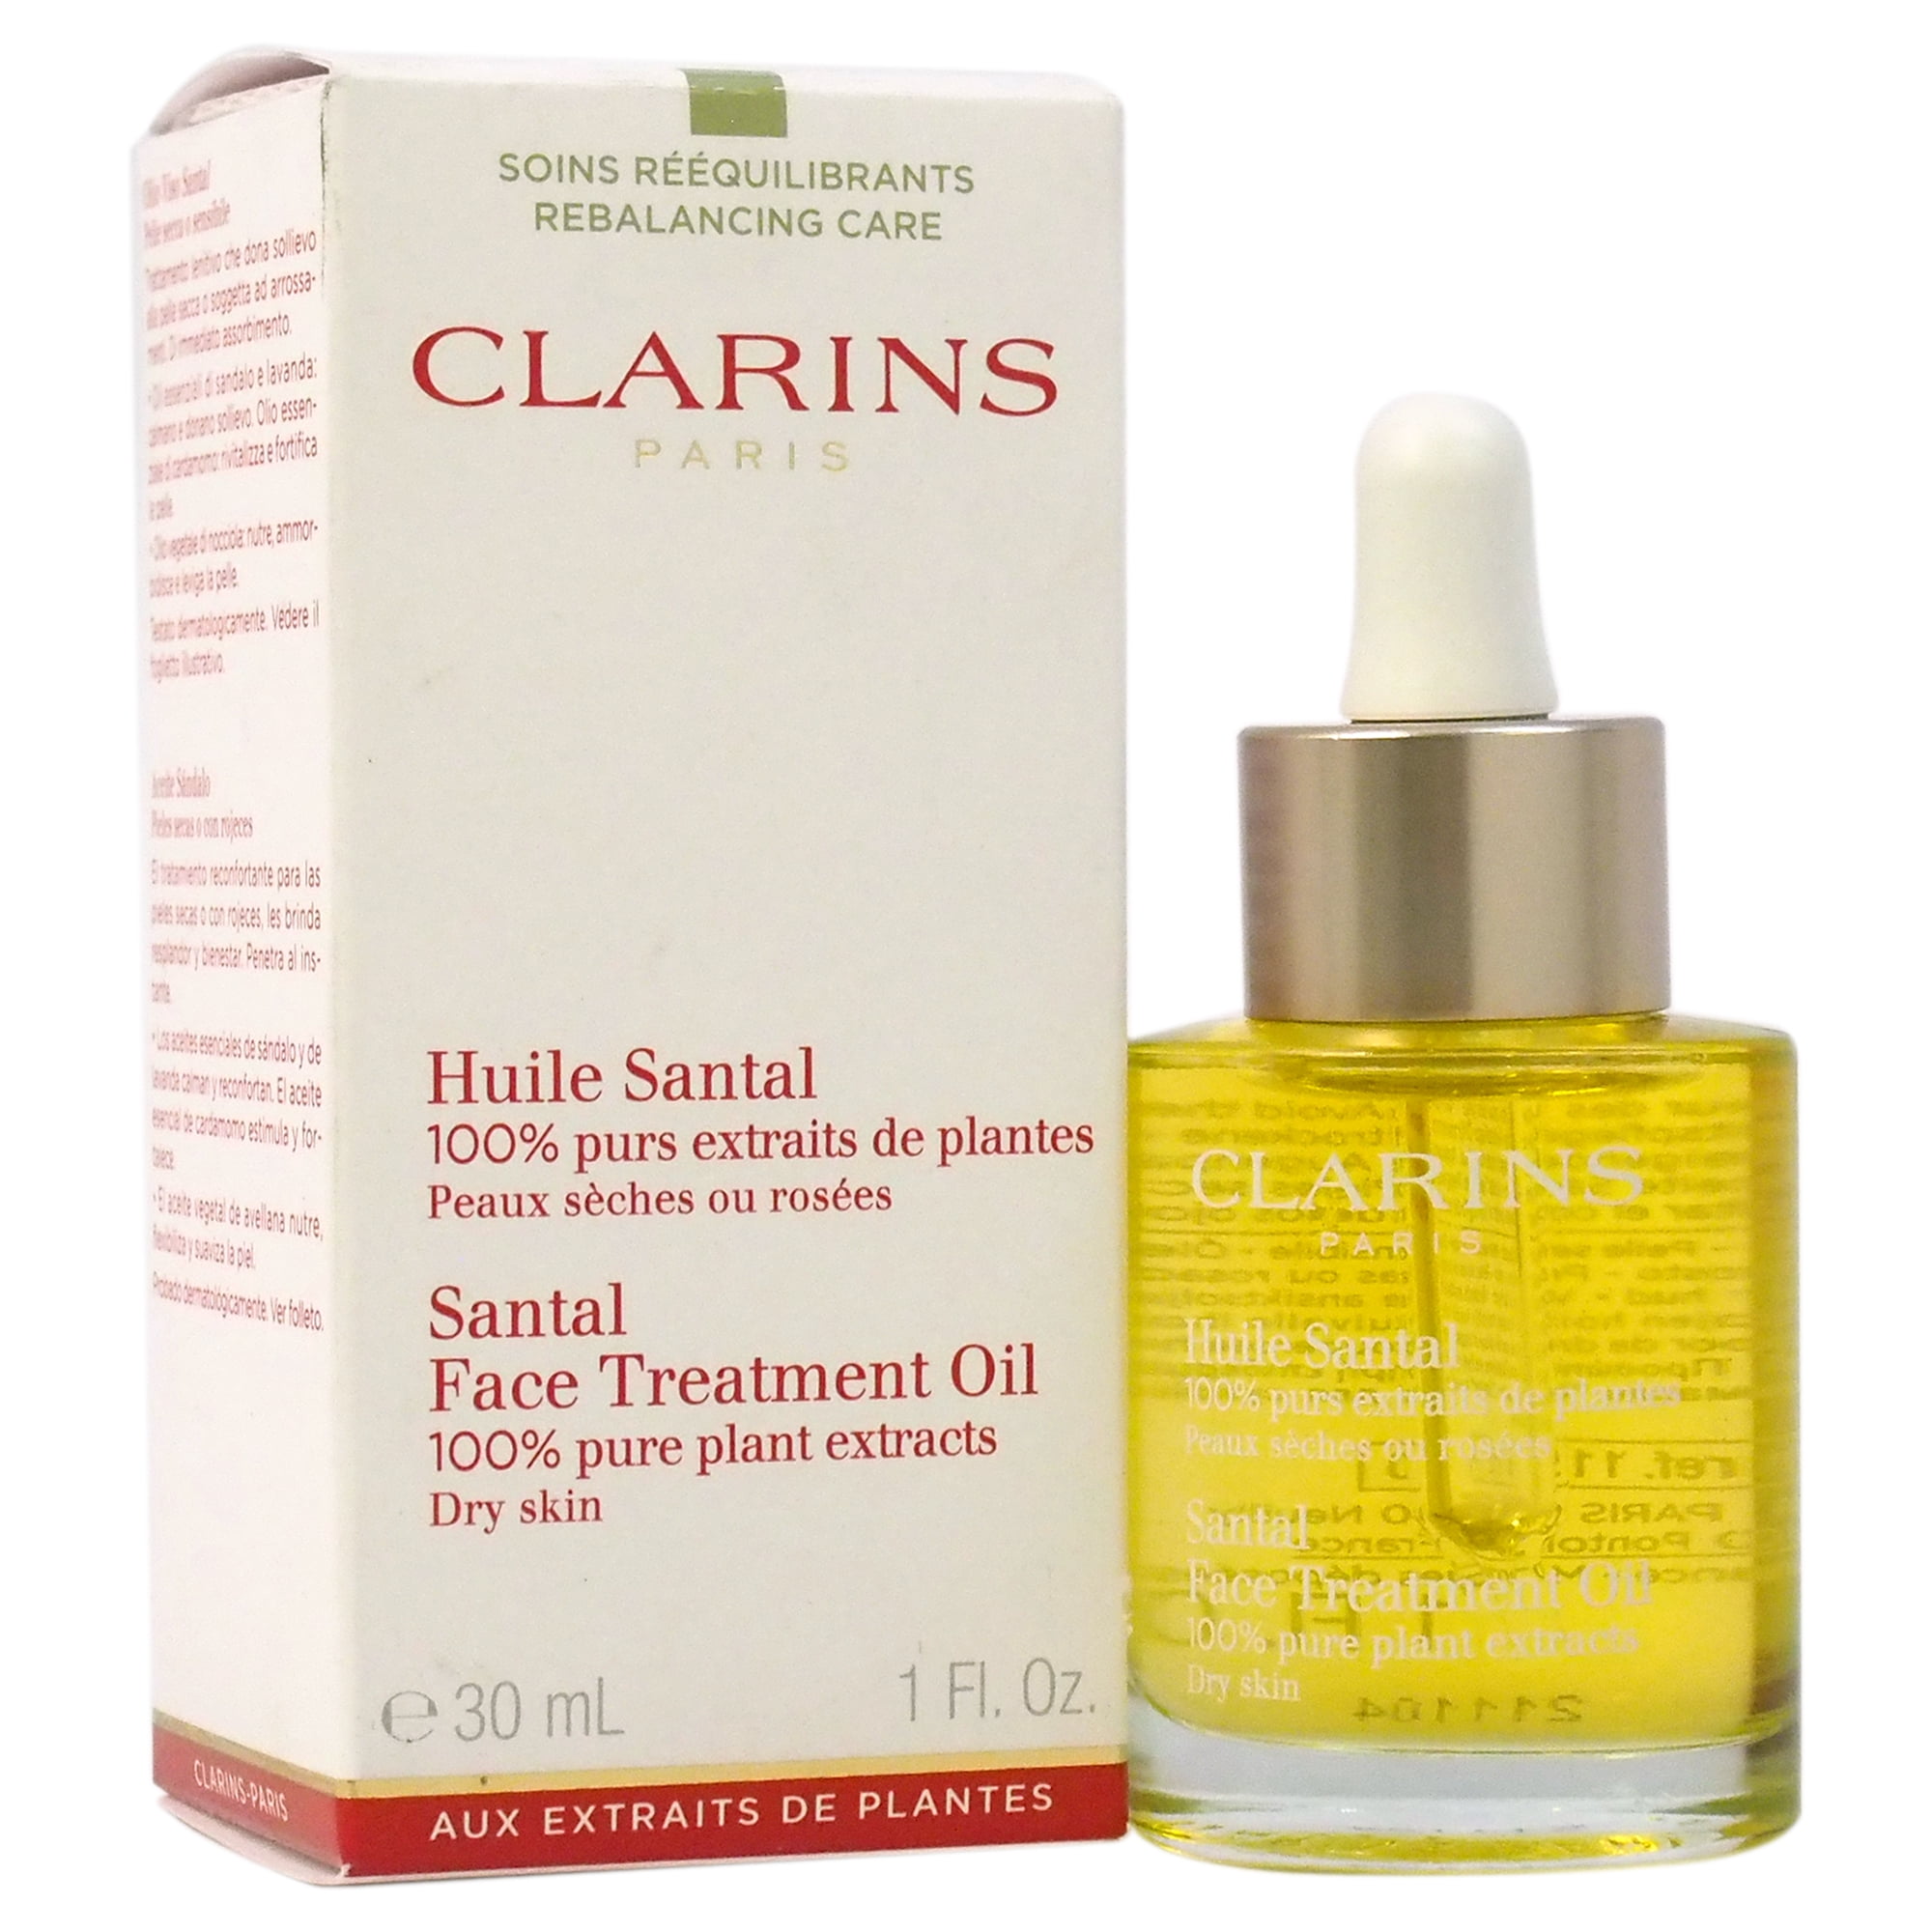 Clarins - Santal  twist Treatment Oil - Dry Skin by Clarins  